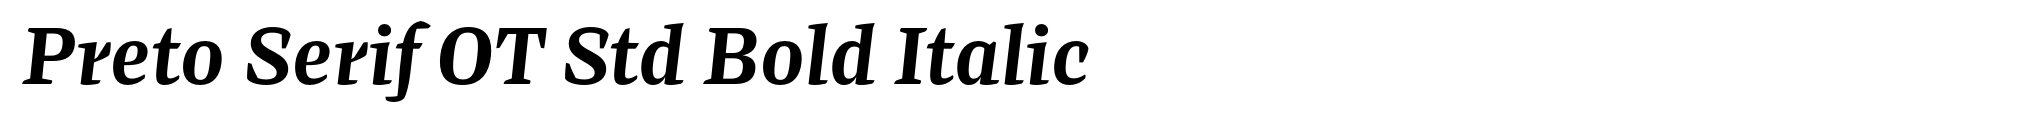 Preto Serif OT Std Bold Italic image